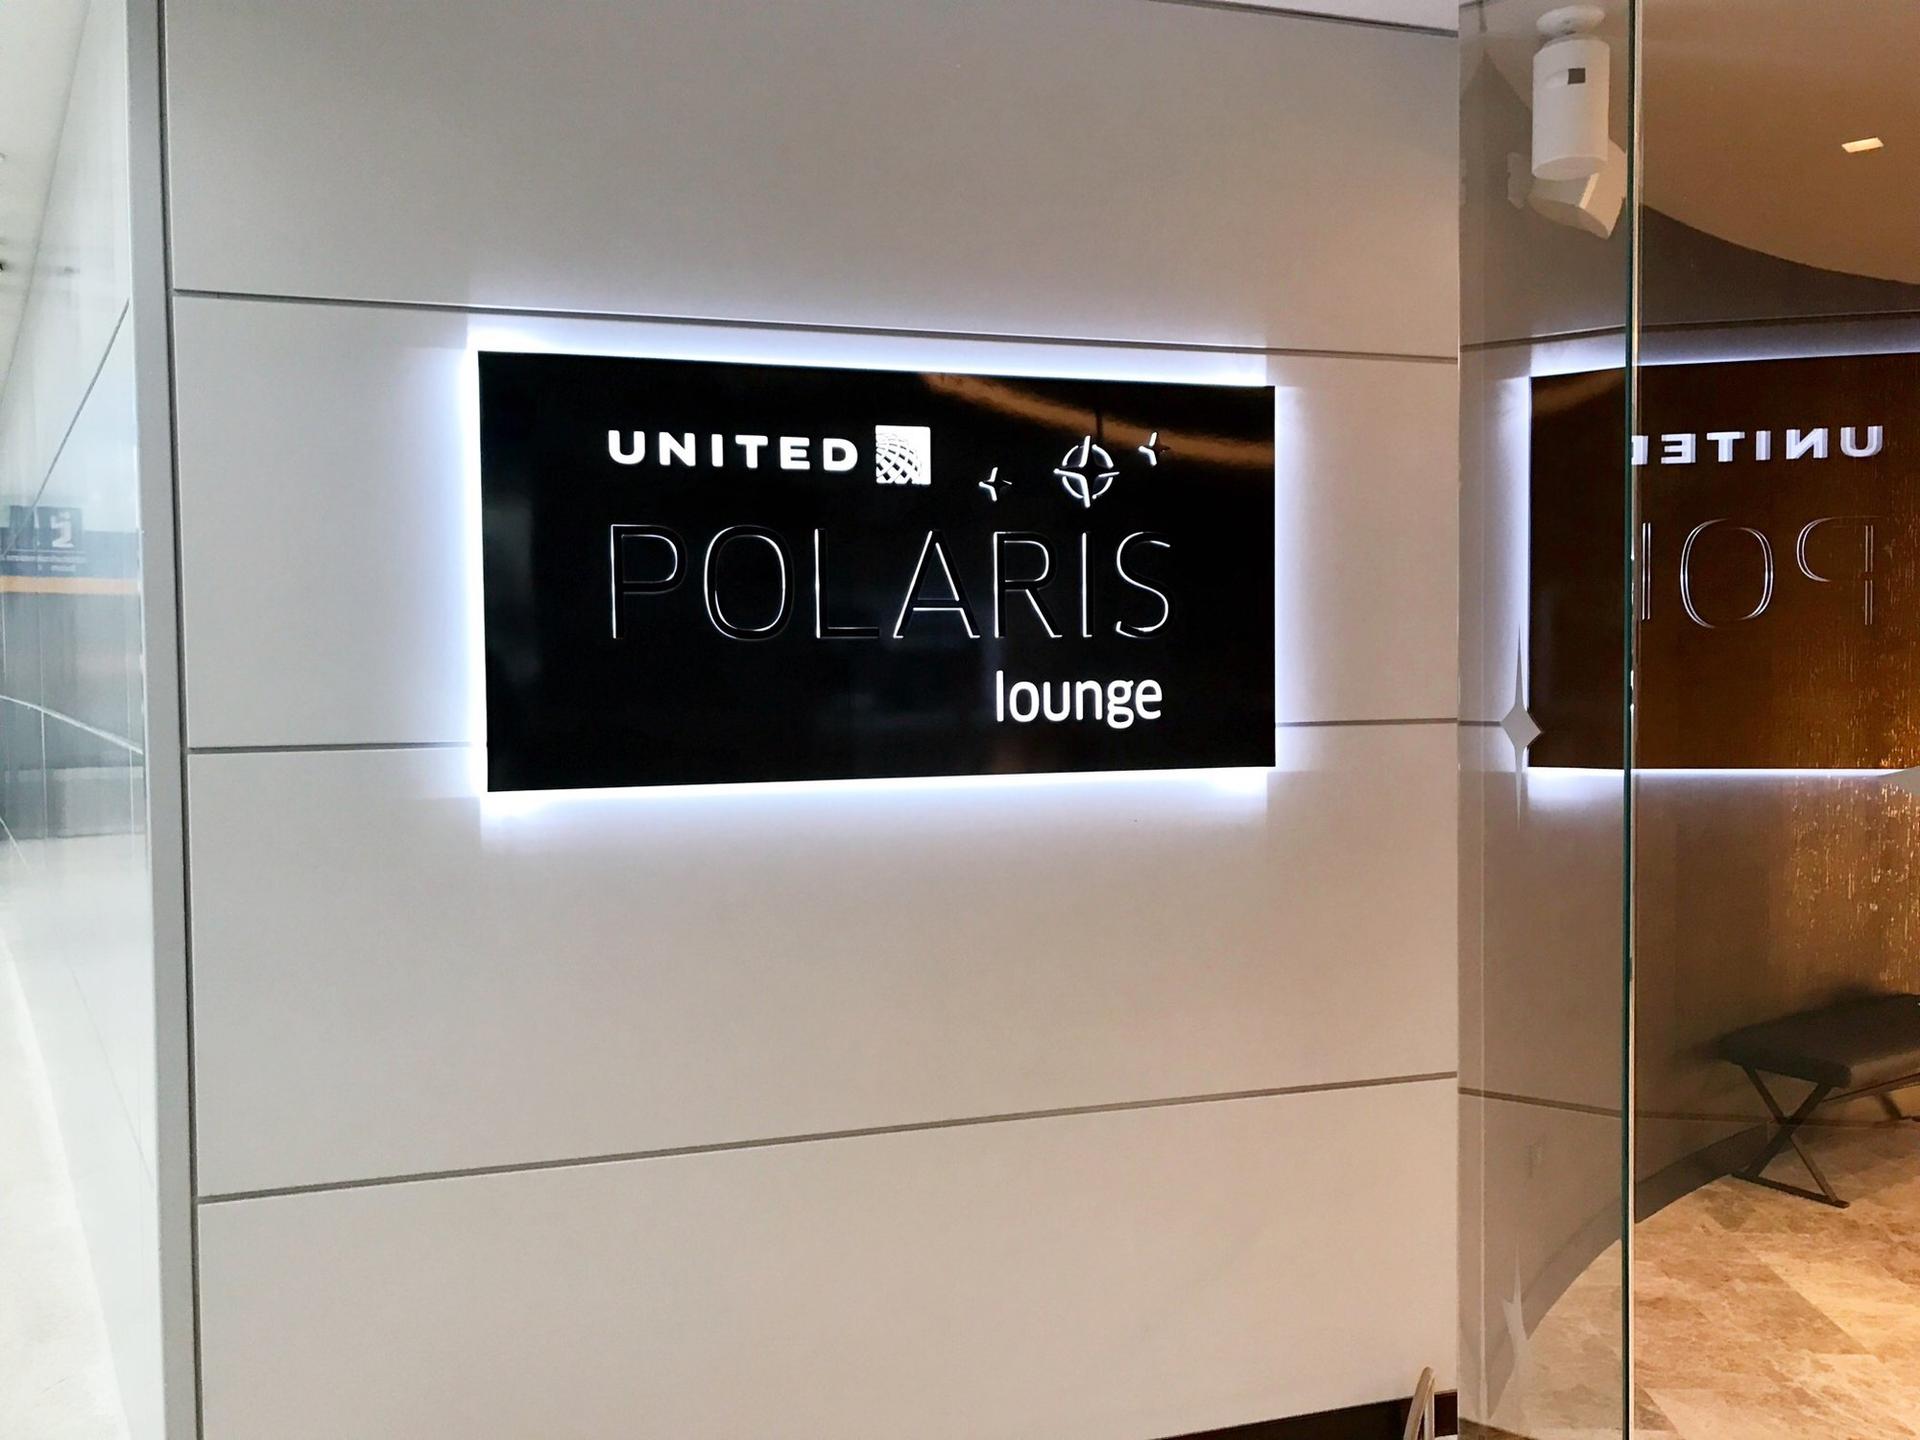 United Airlines Polaris Lounge image 8 of 13